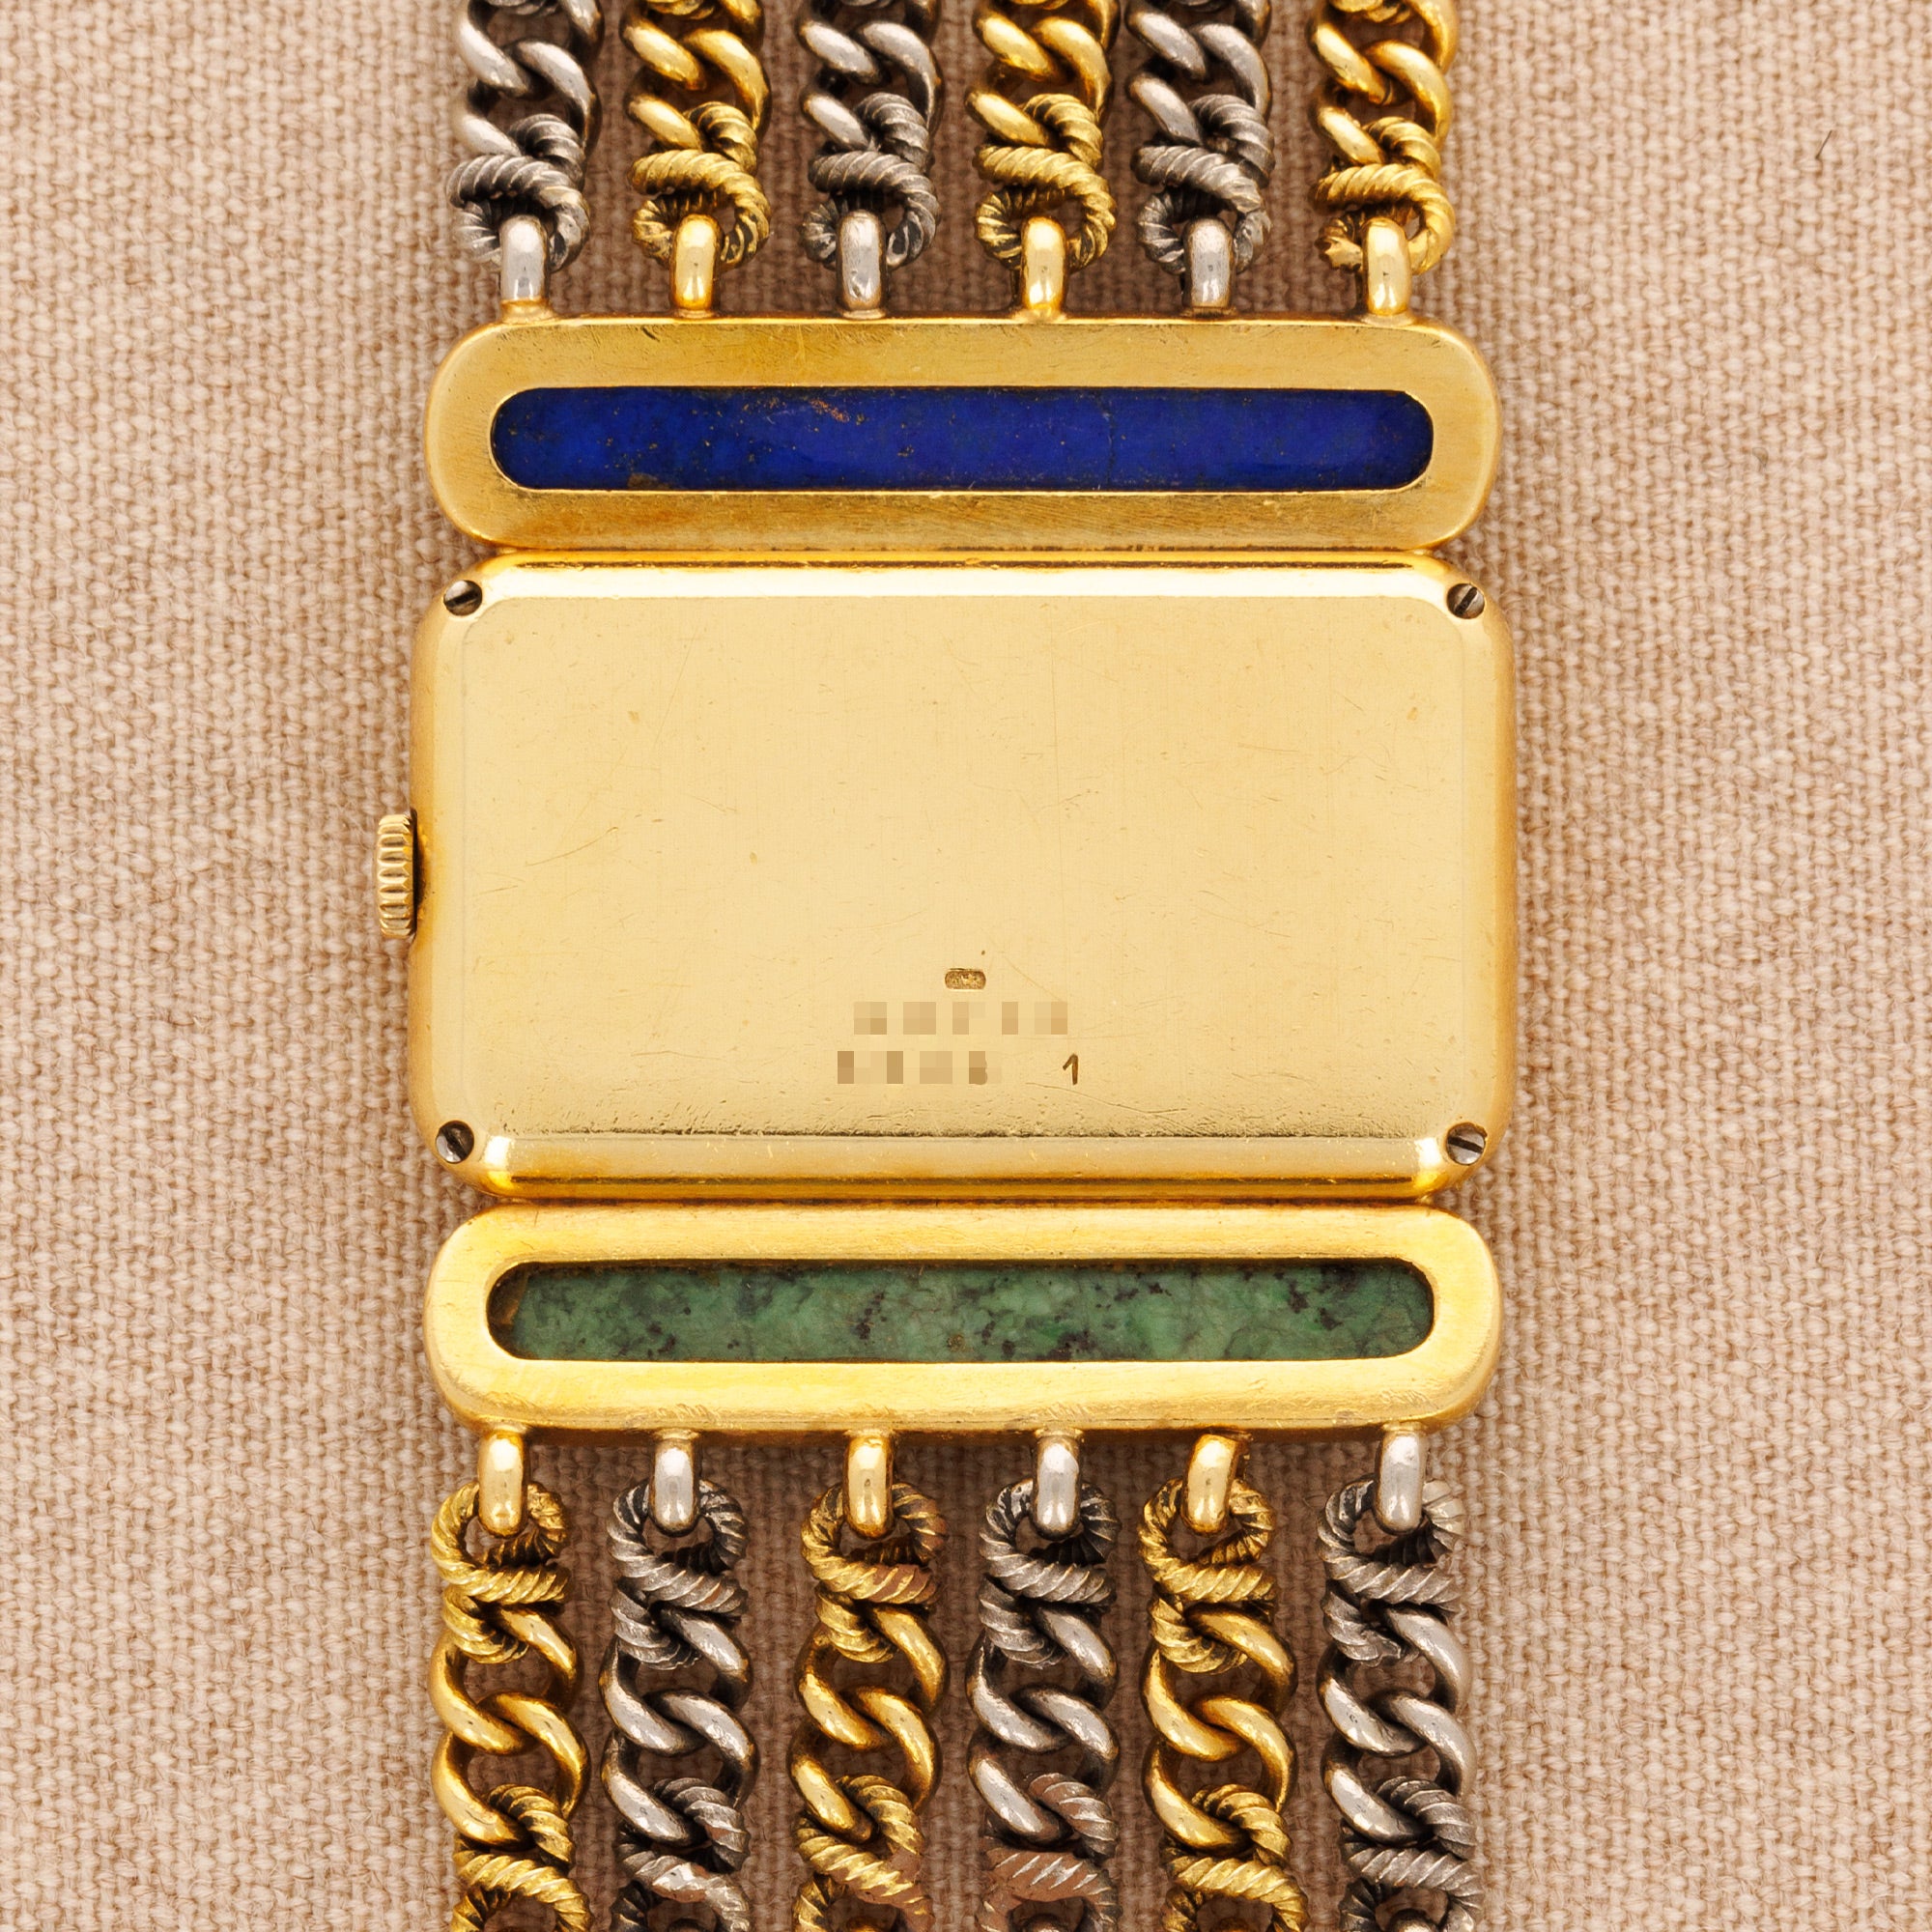 Chopard - Chopard Yellow Gold Lapis & Nephrite Watch - The Keystone Watches